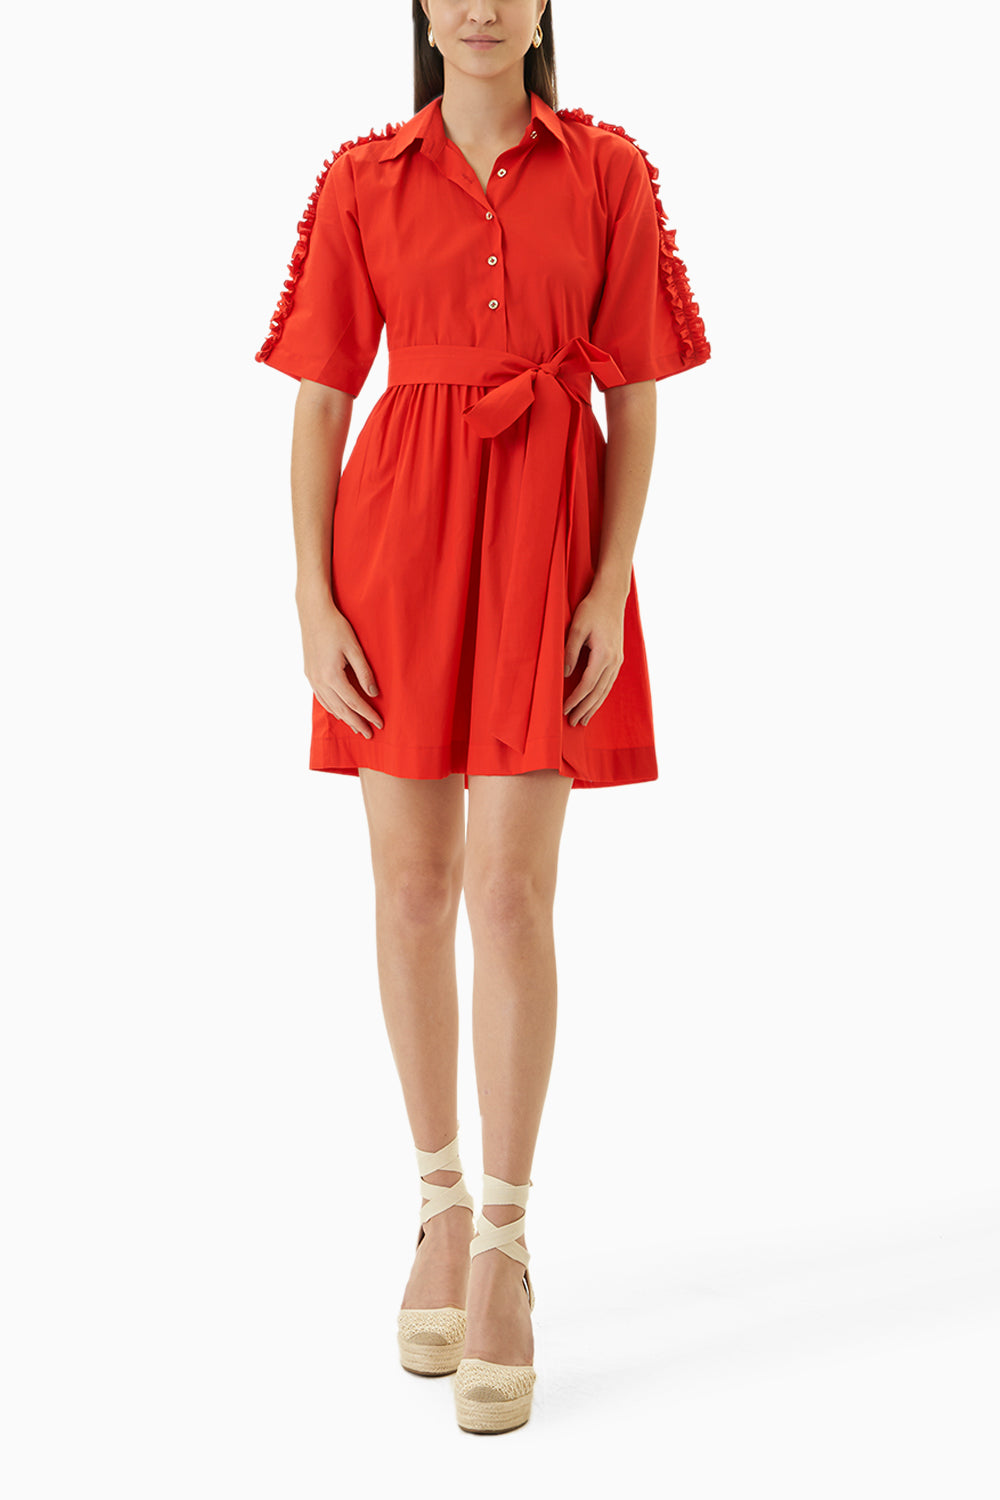 Red Roselyn Dress